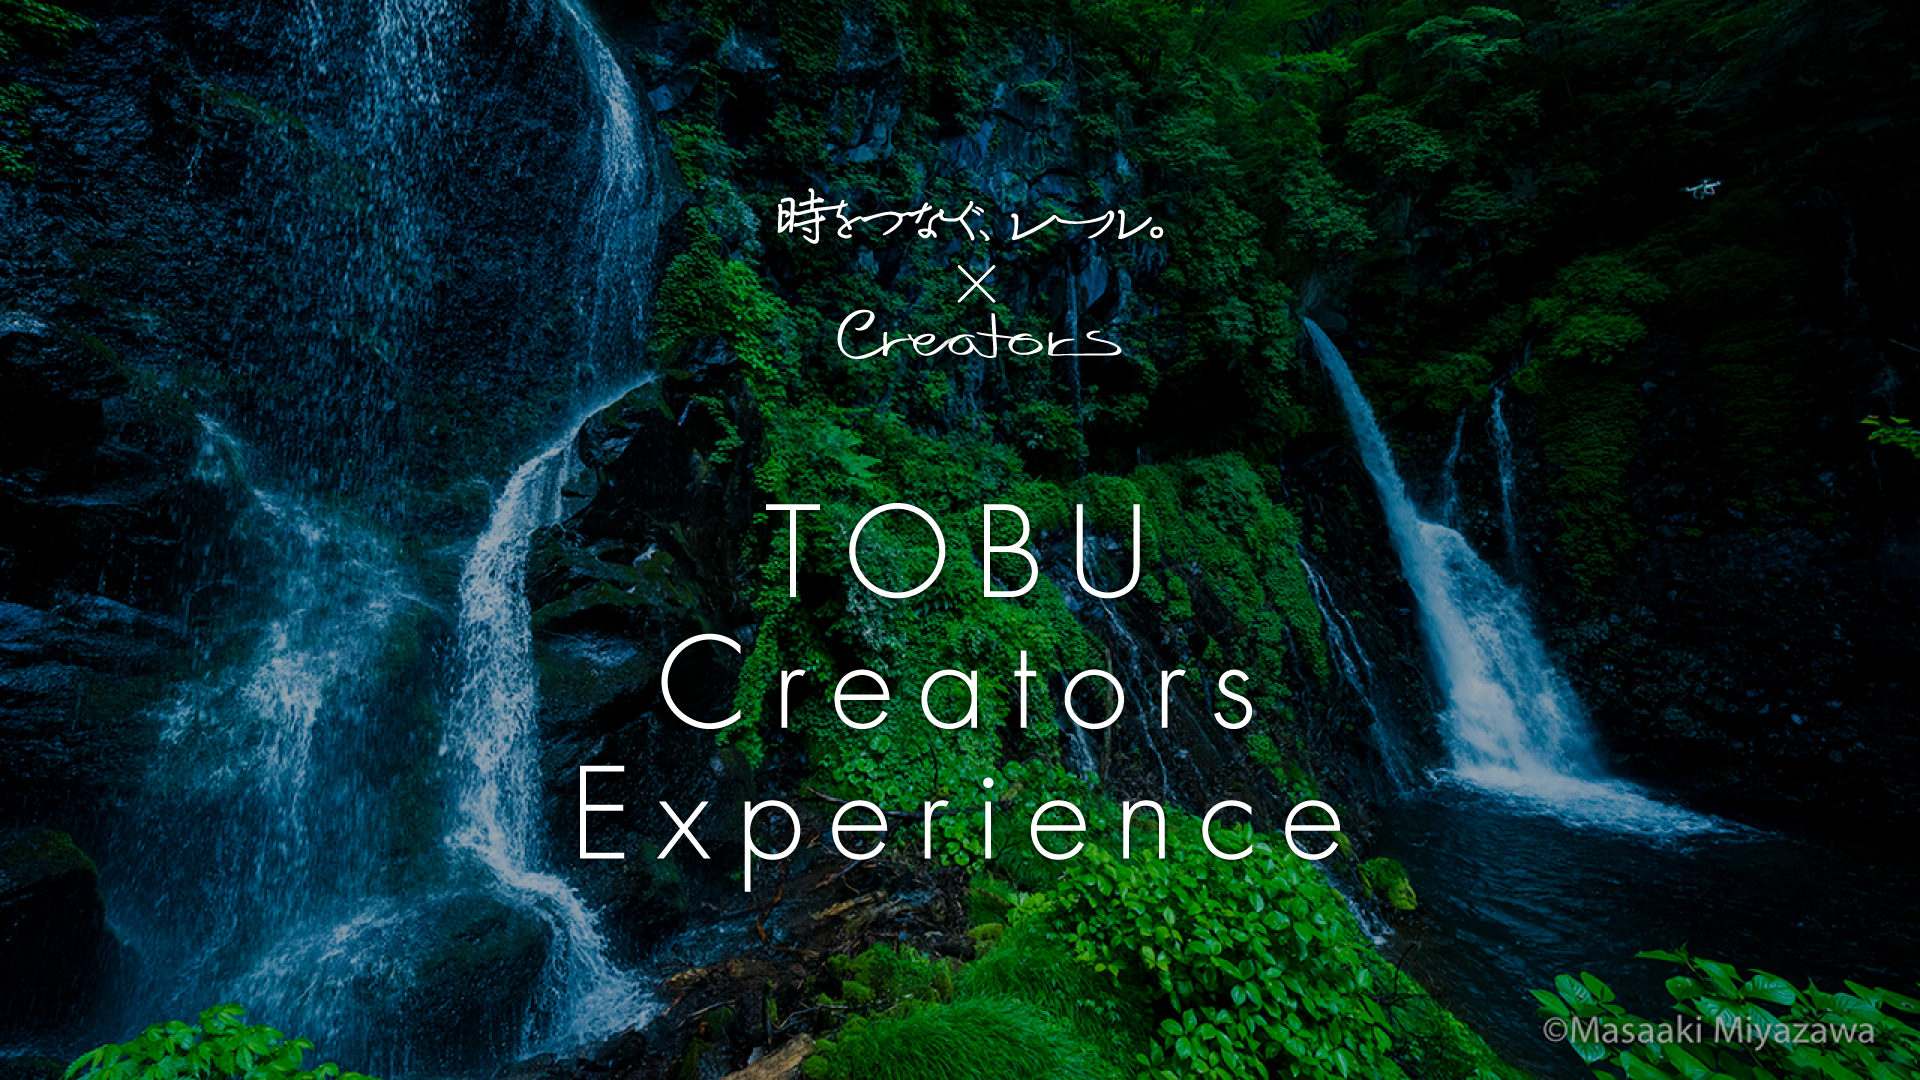 TOBU CREATORS EXPERIENCE